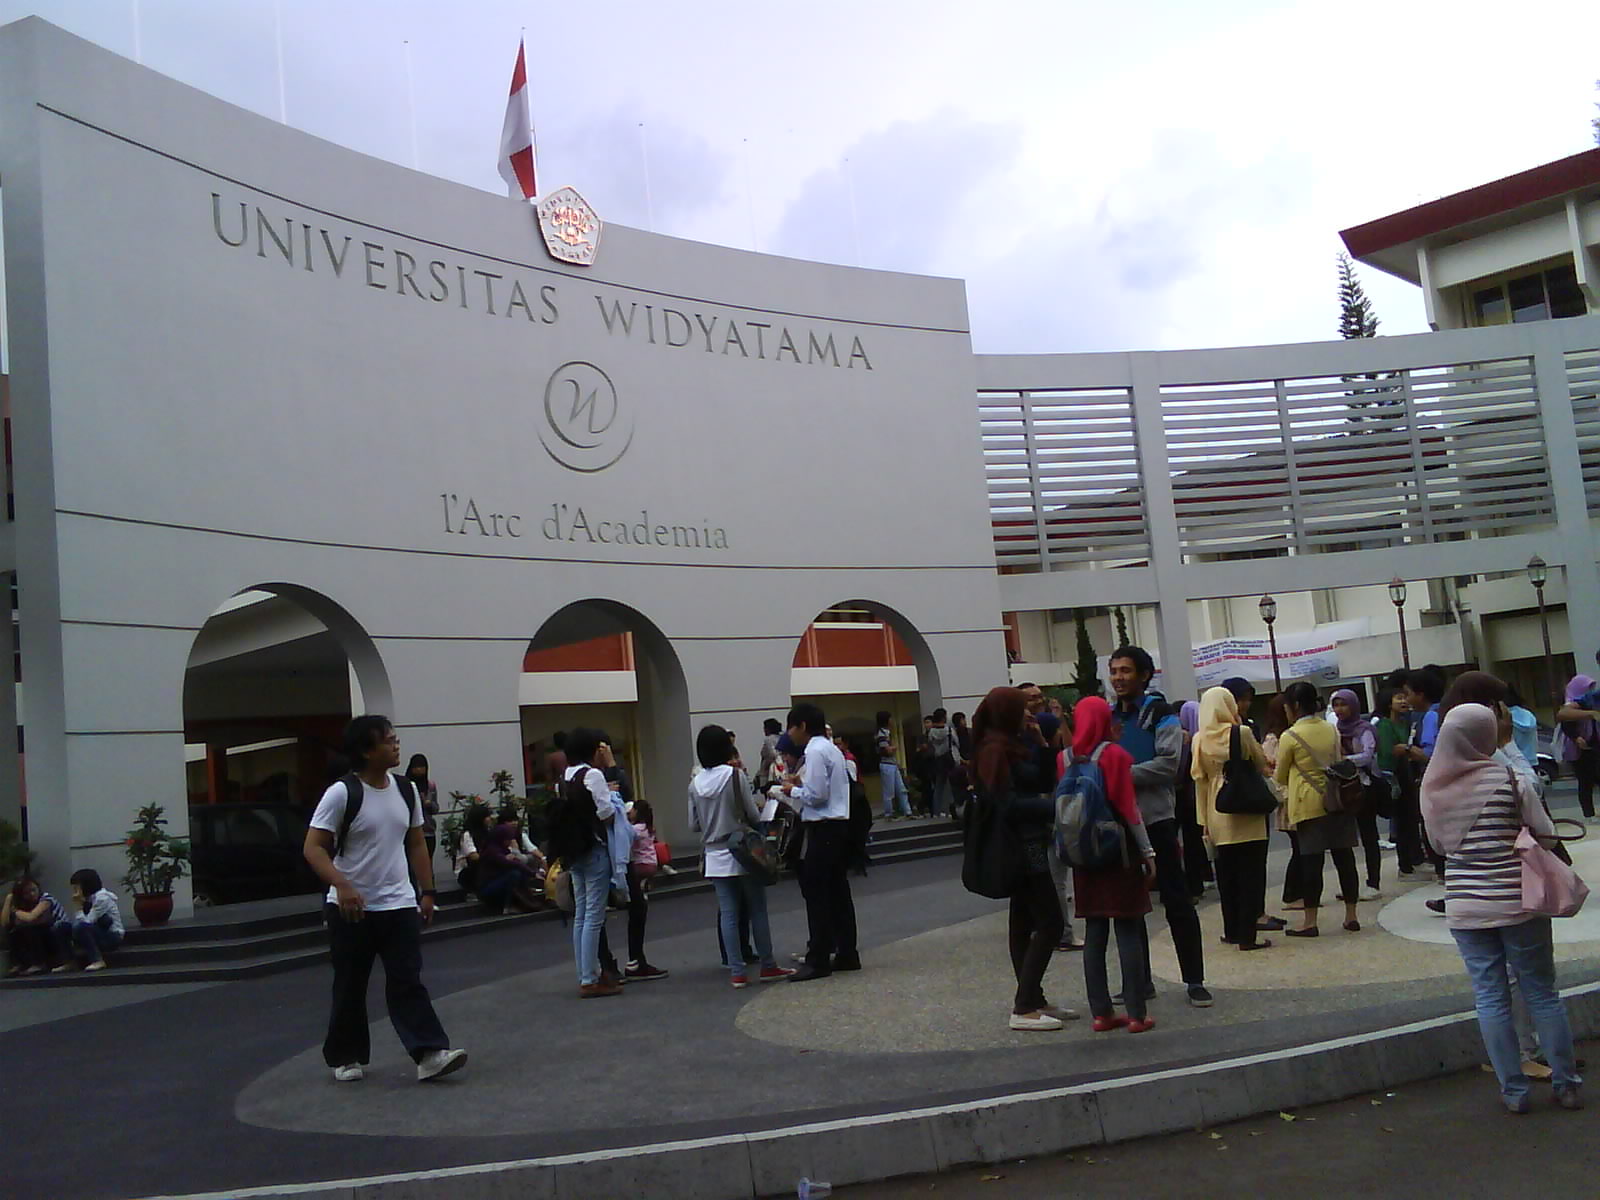 Widyatama University campus